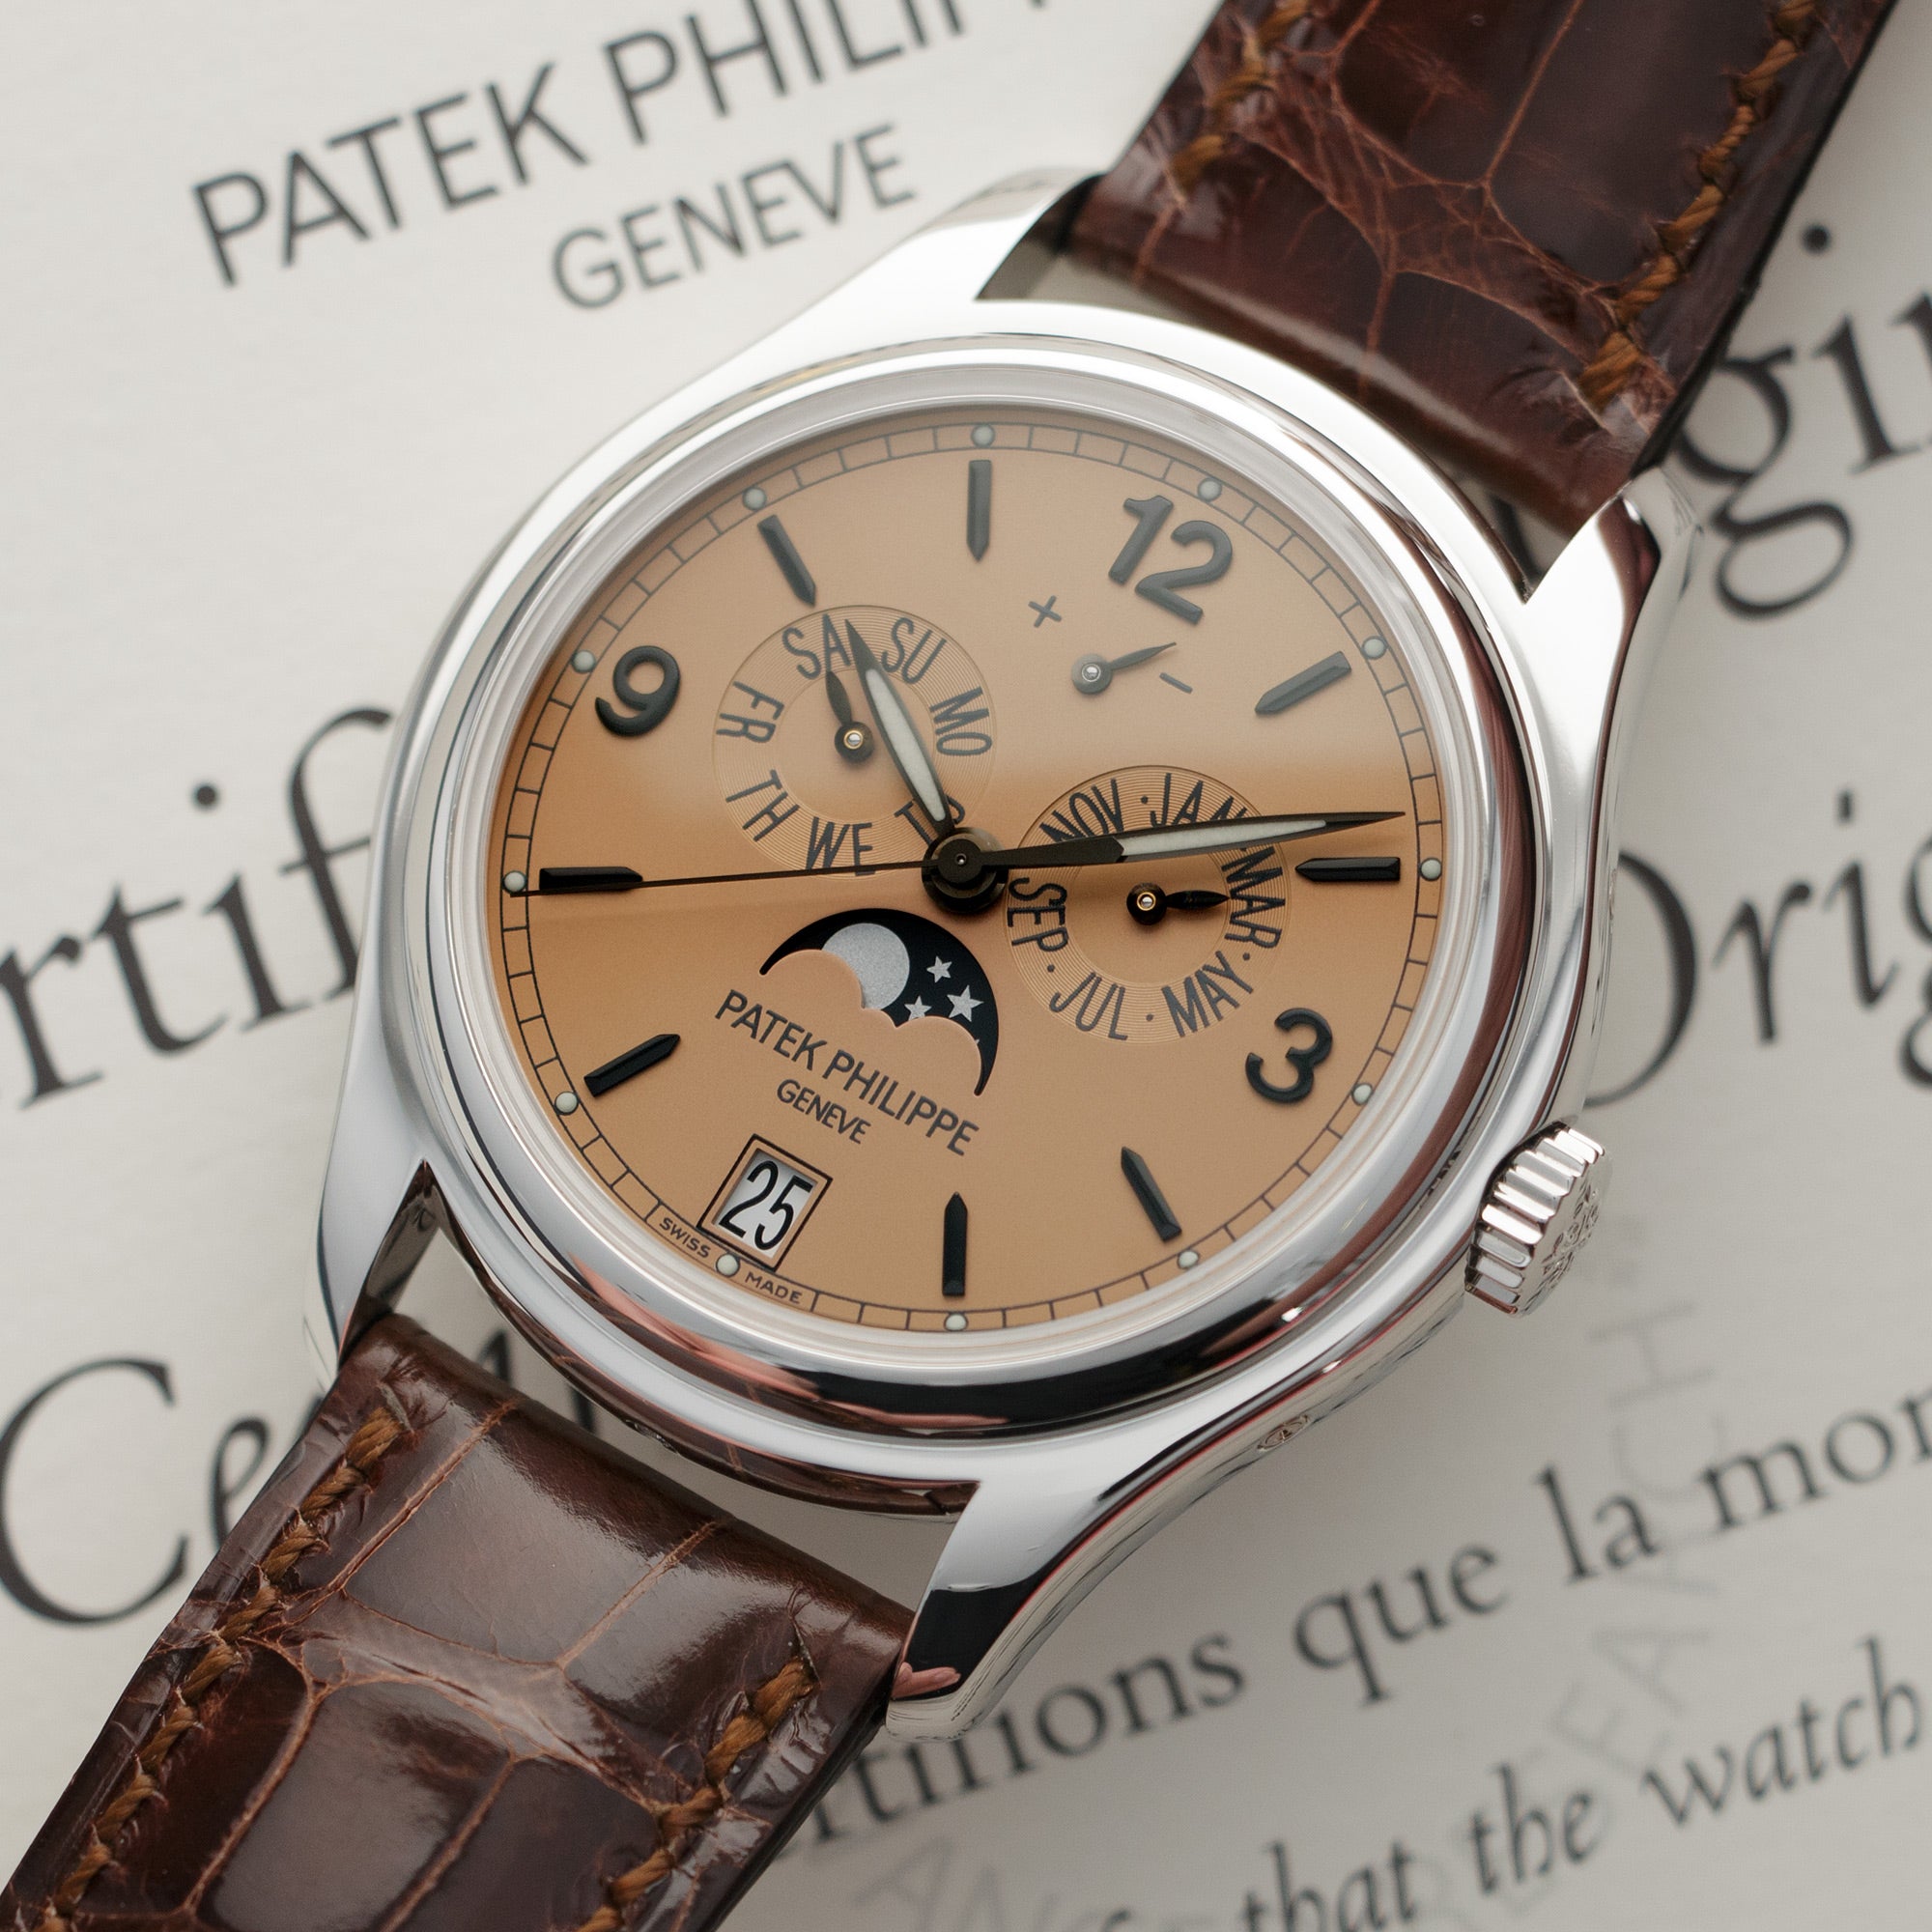 Patek Philippe - Patek Philippe Platinum Advanced Research Annual Calendar Watch Ref. 5450 - The Keystone Watches